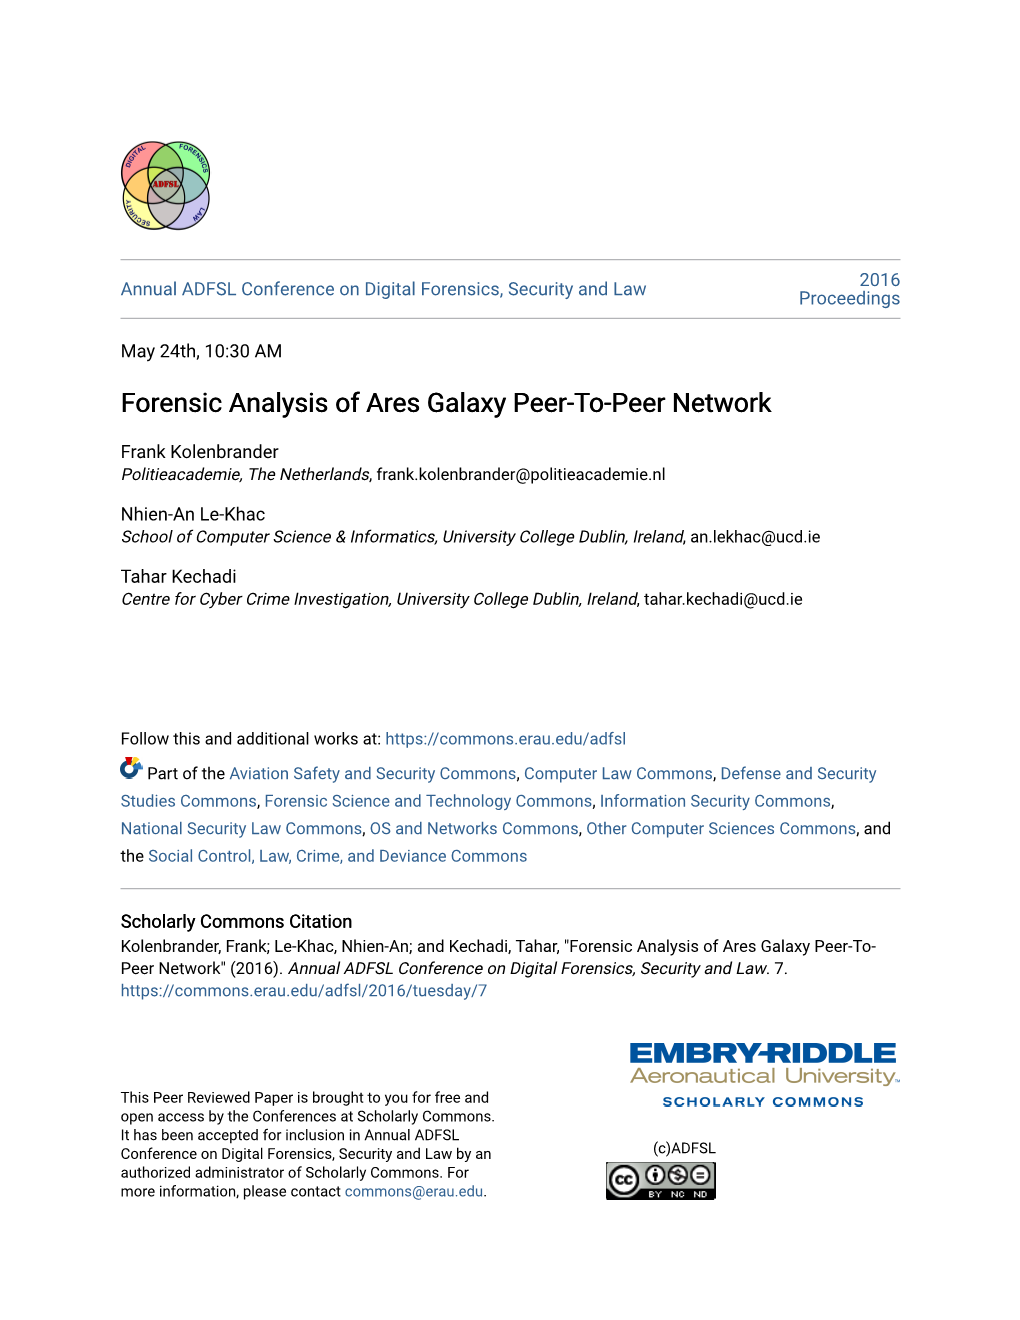 Forensic Analysis of Ares Galaxy Peer-To-Peer Network